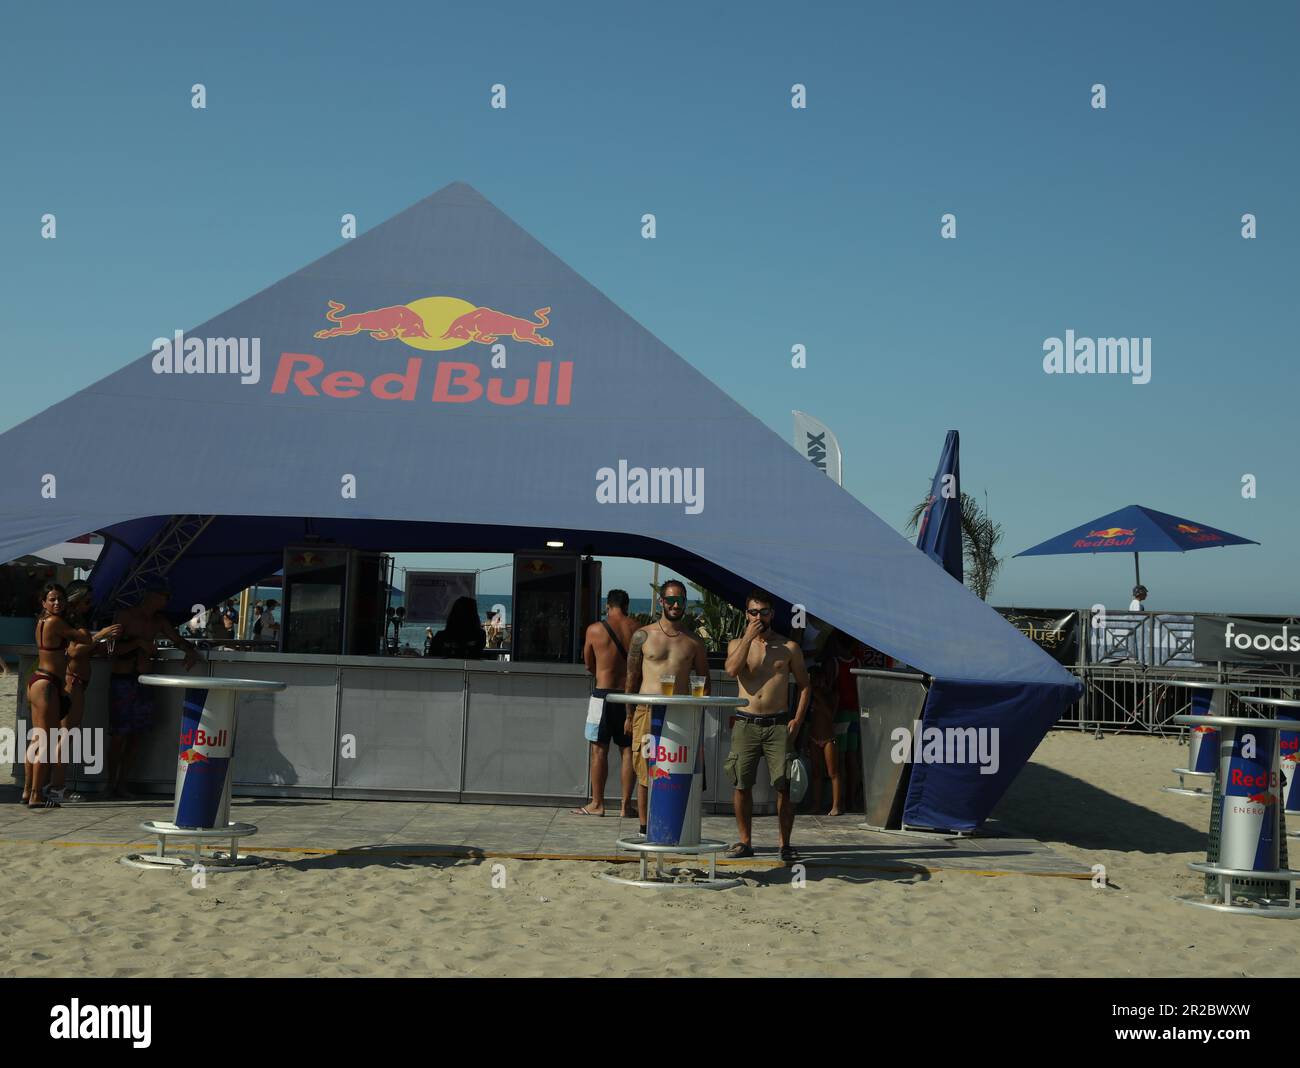 SENIGALLIA, ITALIEN - 22. JULI 2022: Red Bull Zelt am Strand unter blauem Himmel Stockfoto